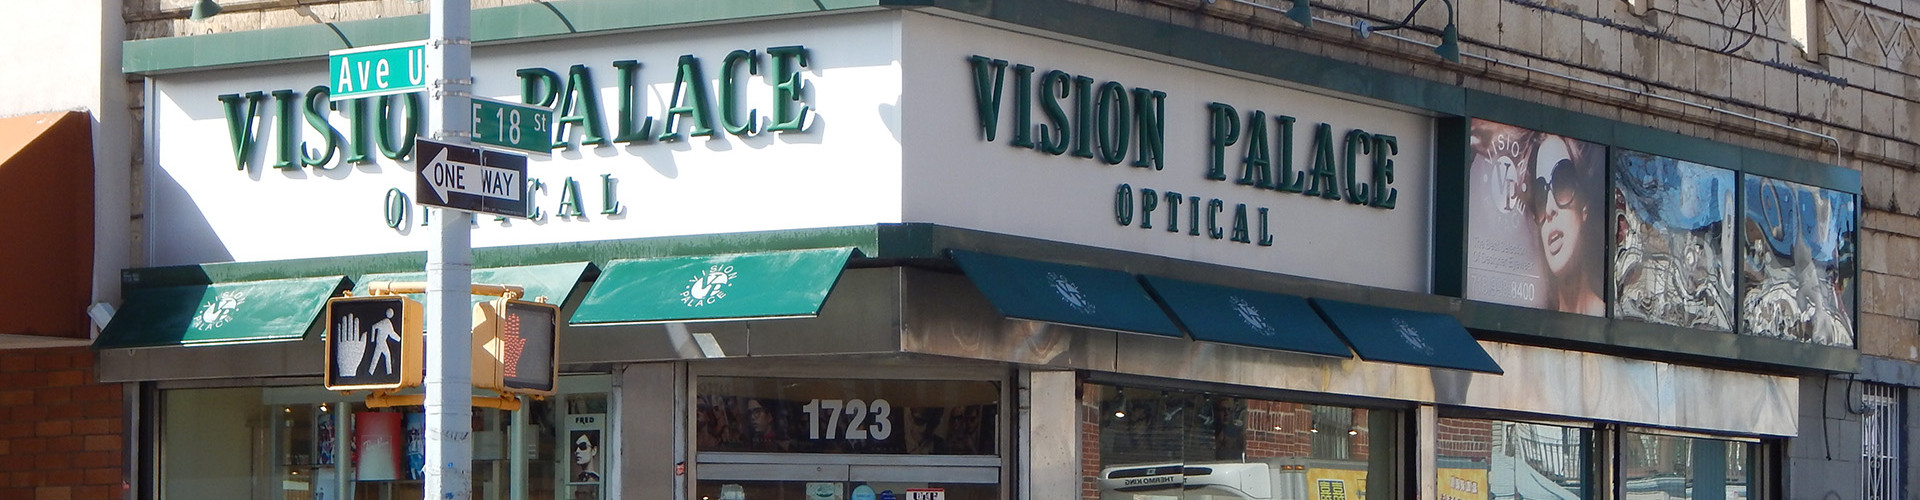 Vision Palace Optical | 1723 Avenue U, Brooklyn, NY 11229